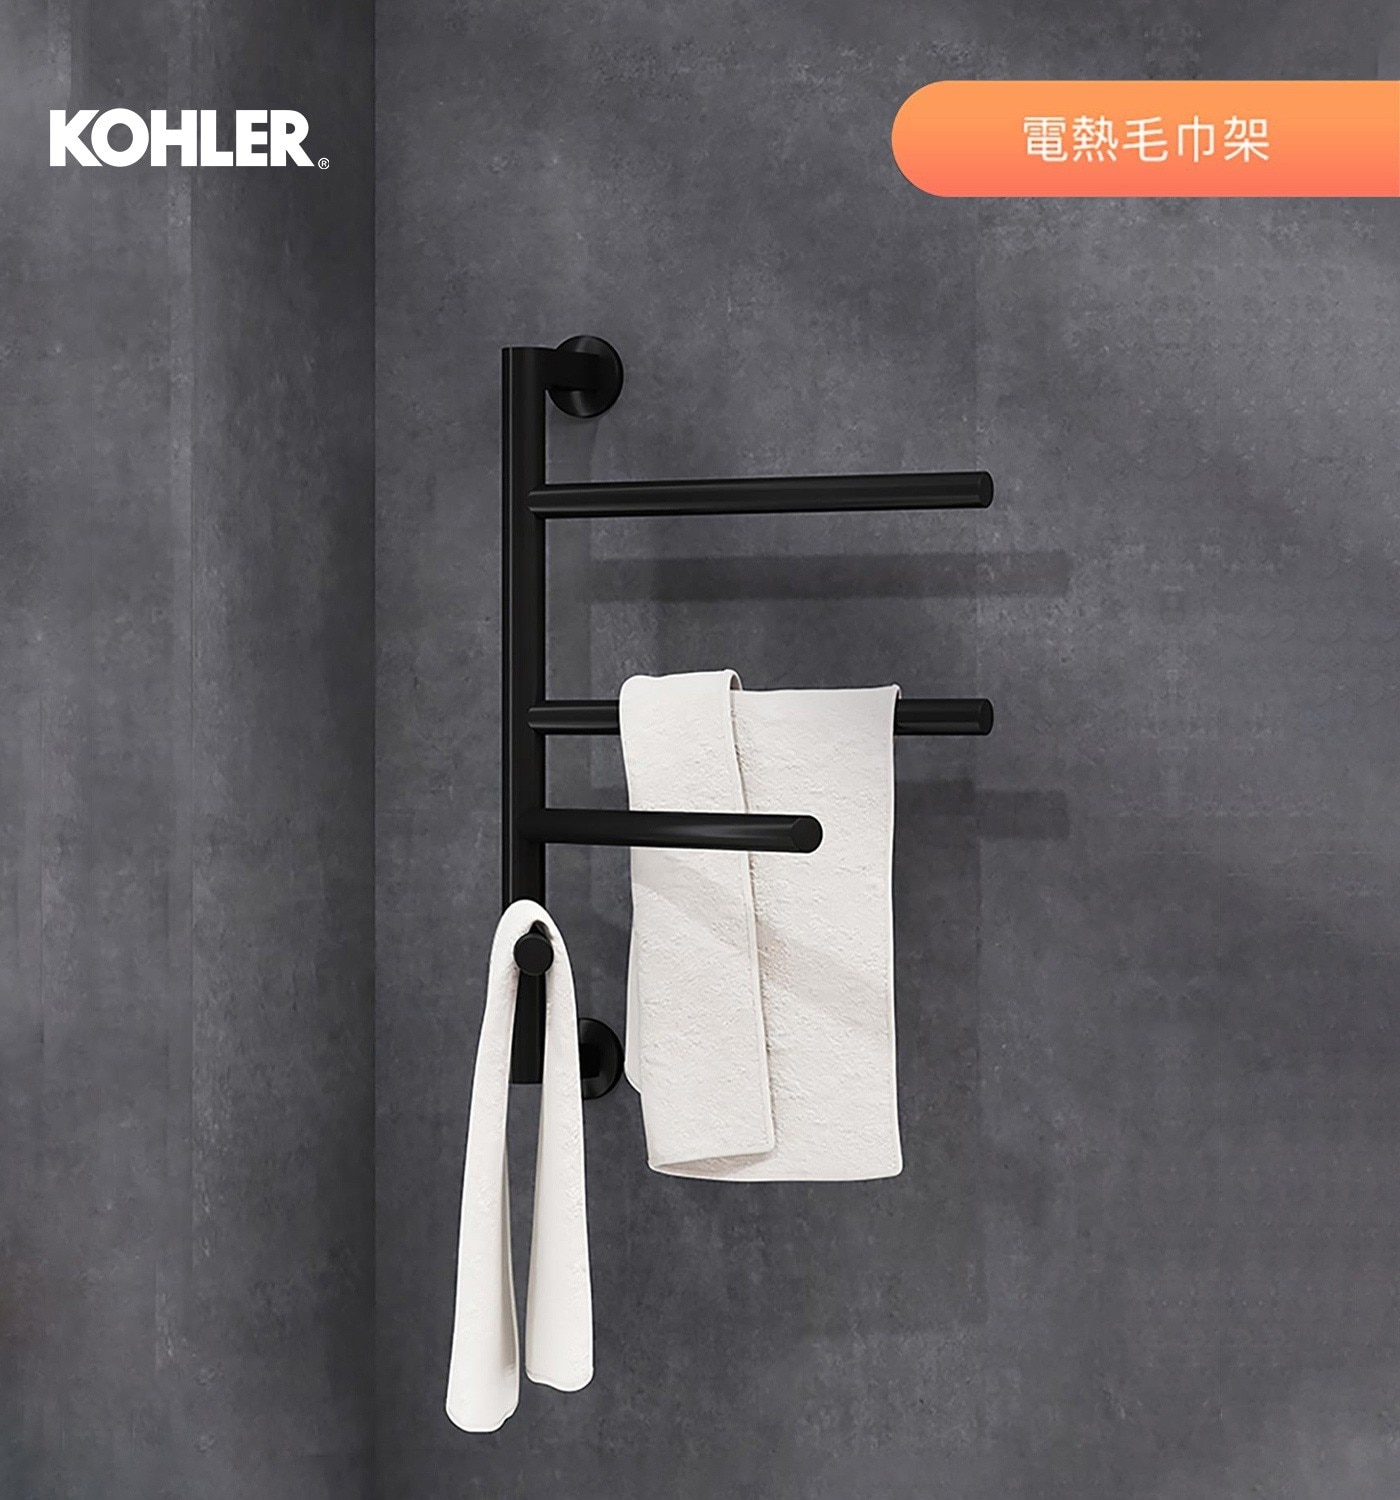 Kohler 電熱毛巾架 110V 產品介紹